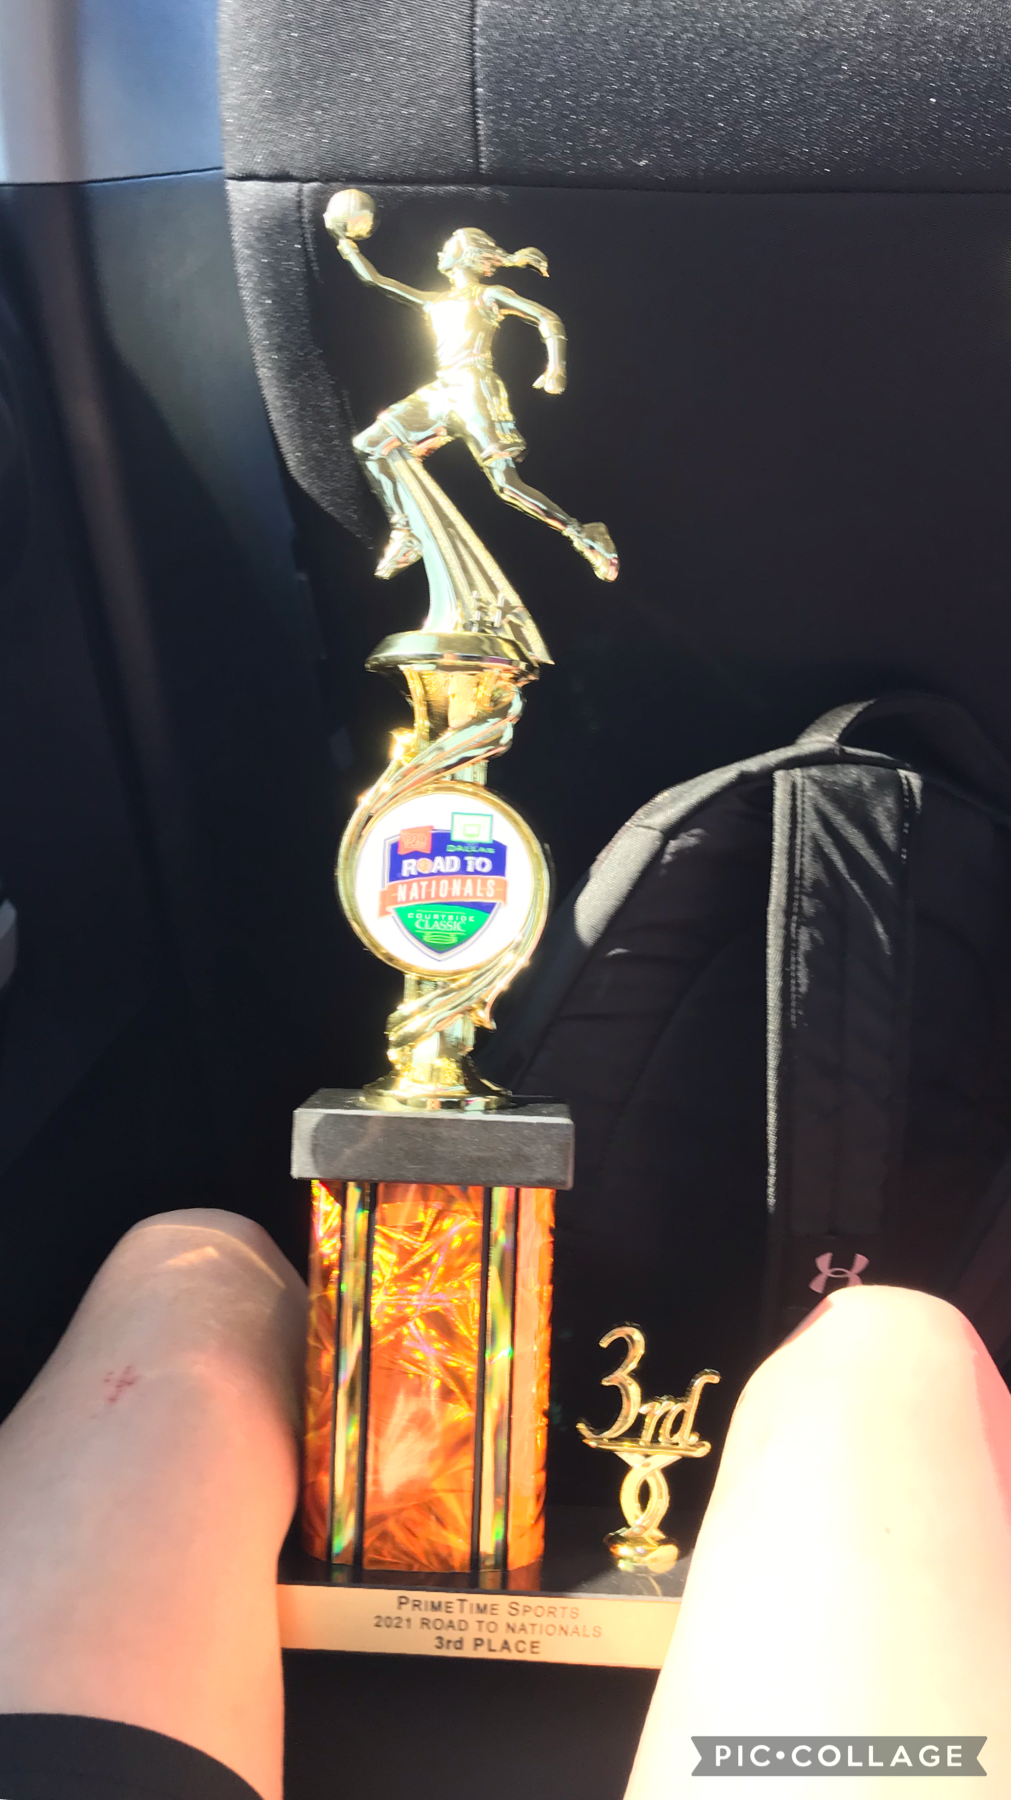 I got the trophy 🏆 